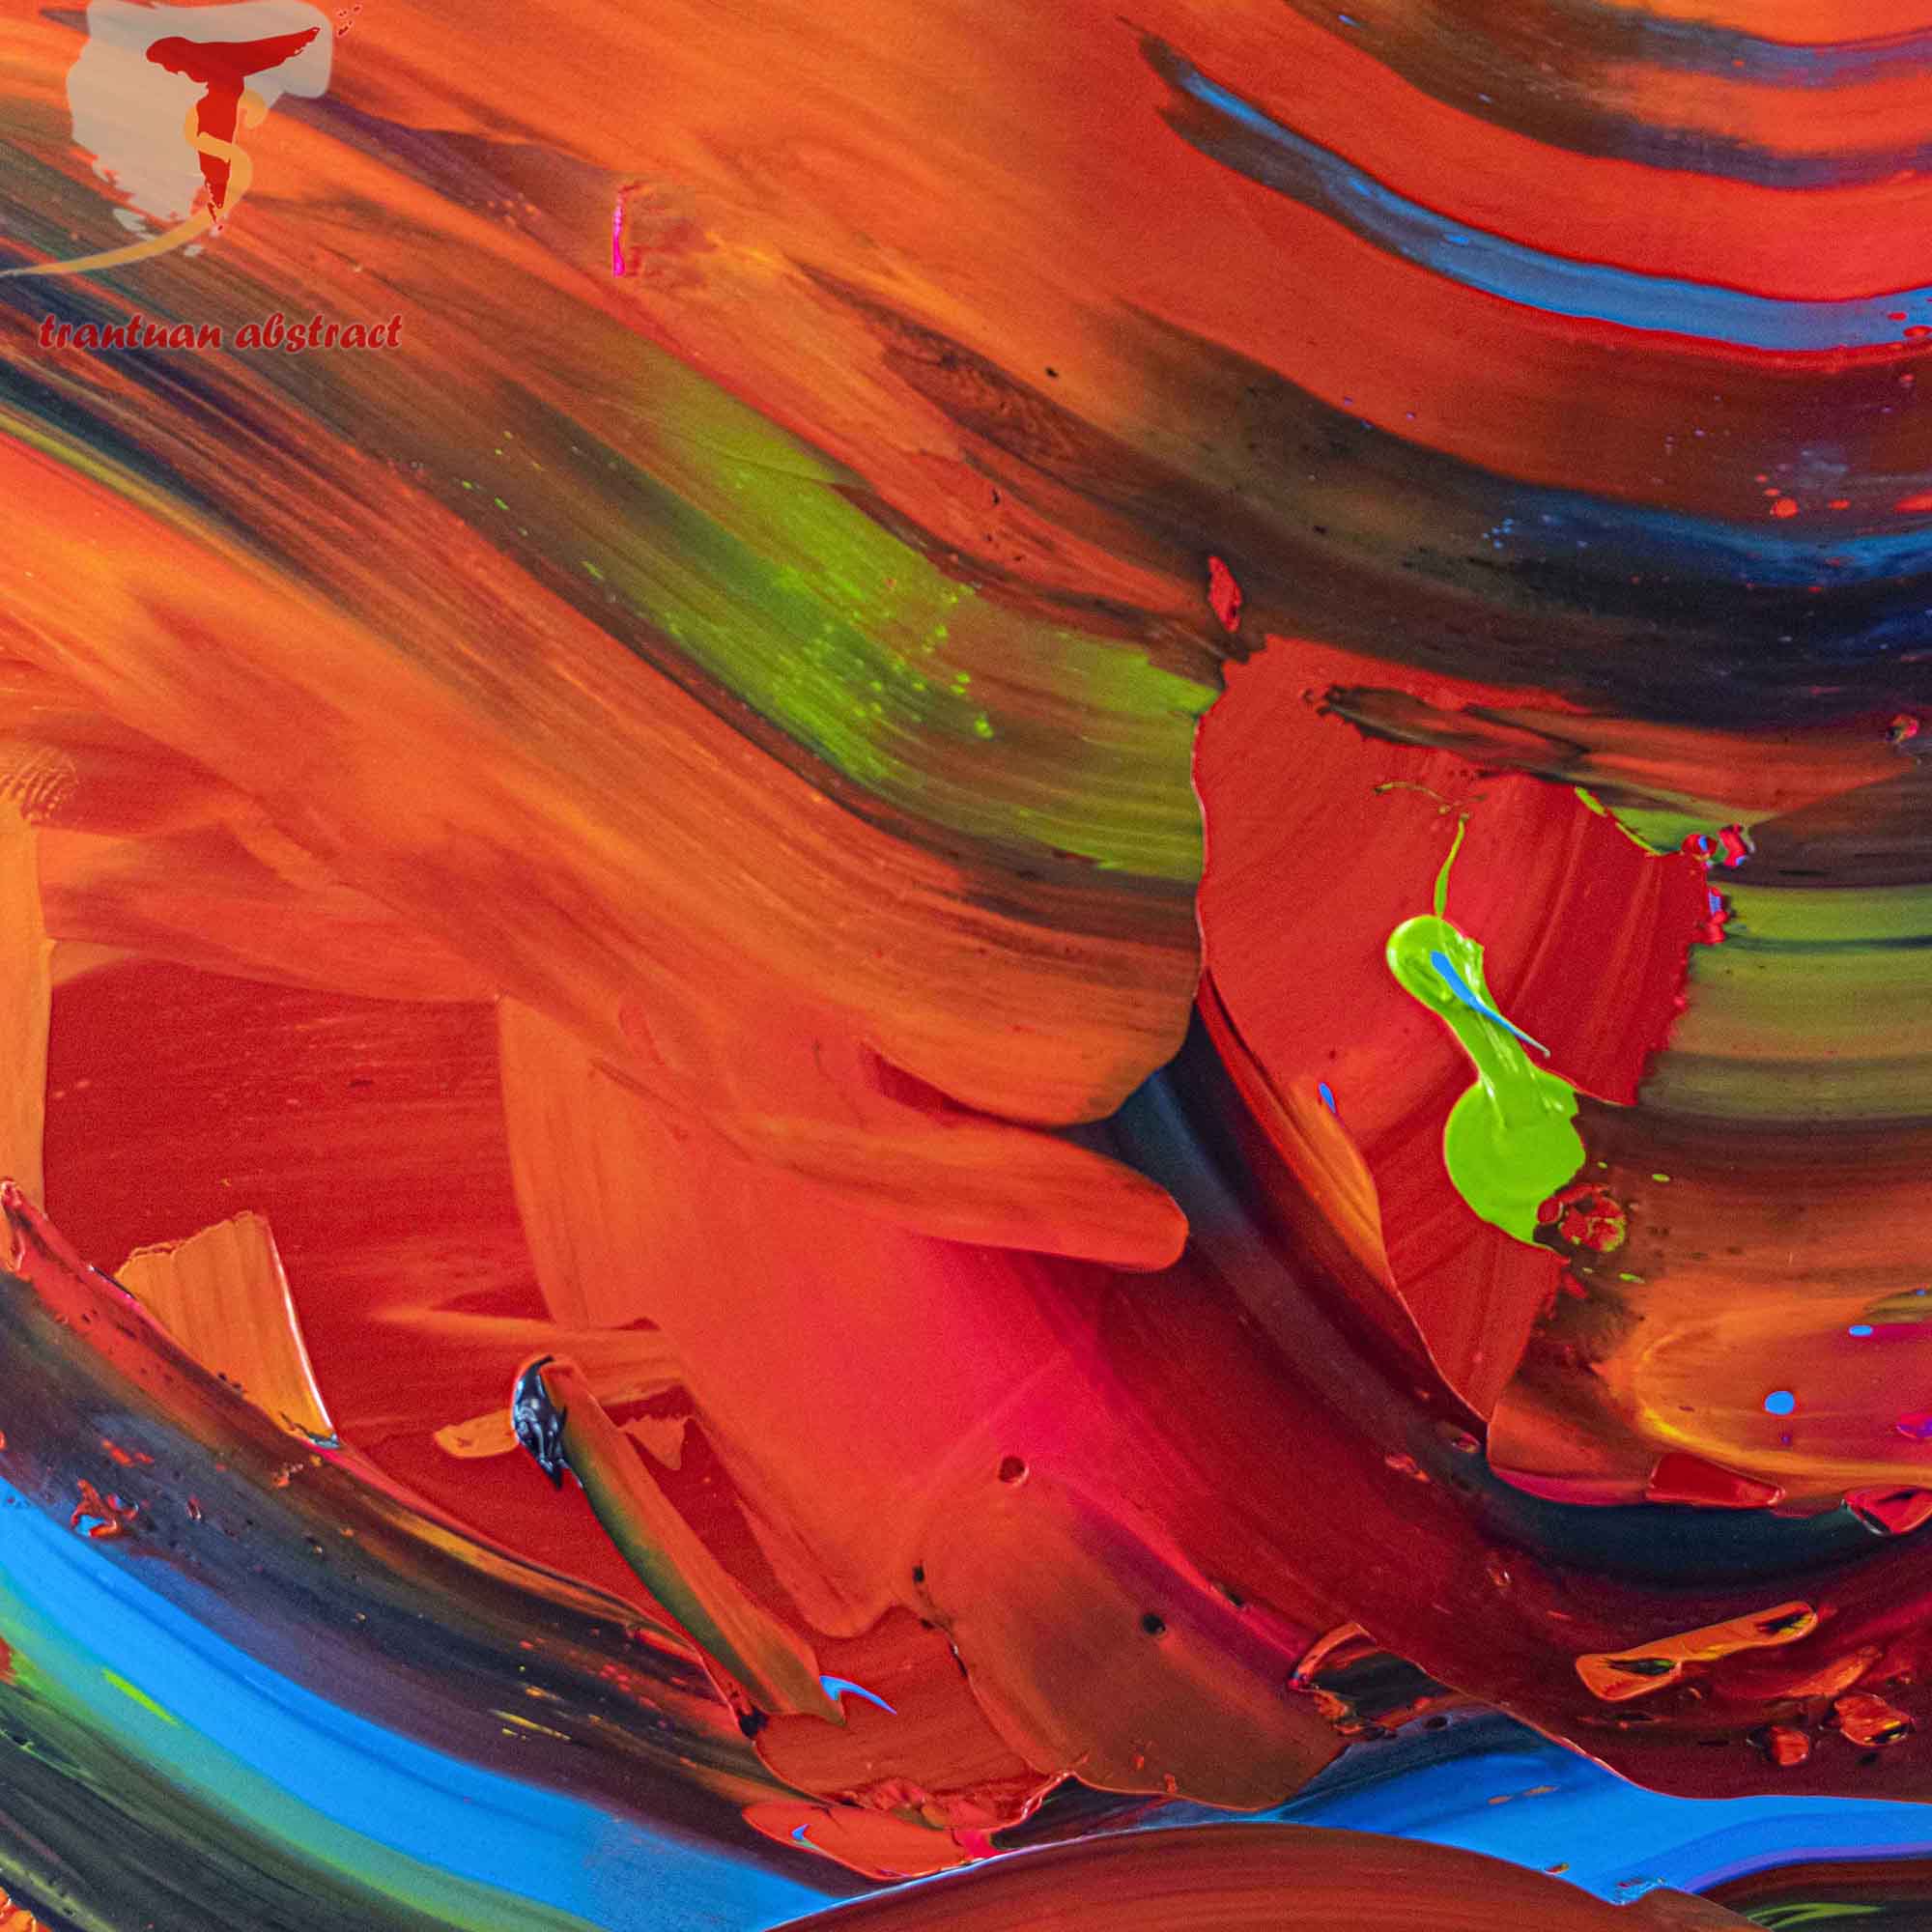 Tran Tuan Abstract Dragon Dance 2021 120 x 100 x 5 cm Acrylic on Canvas Painting Detail s (1)